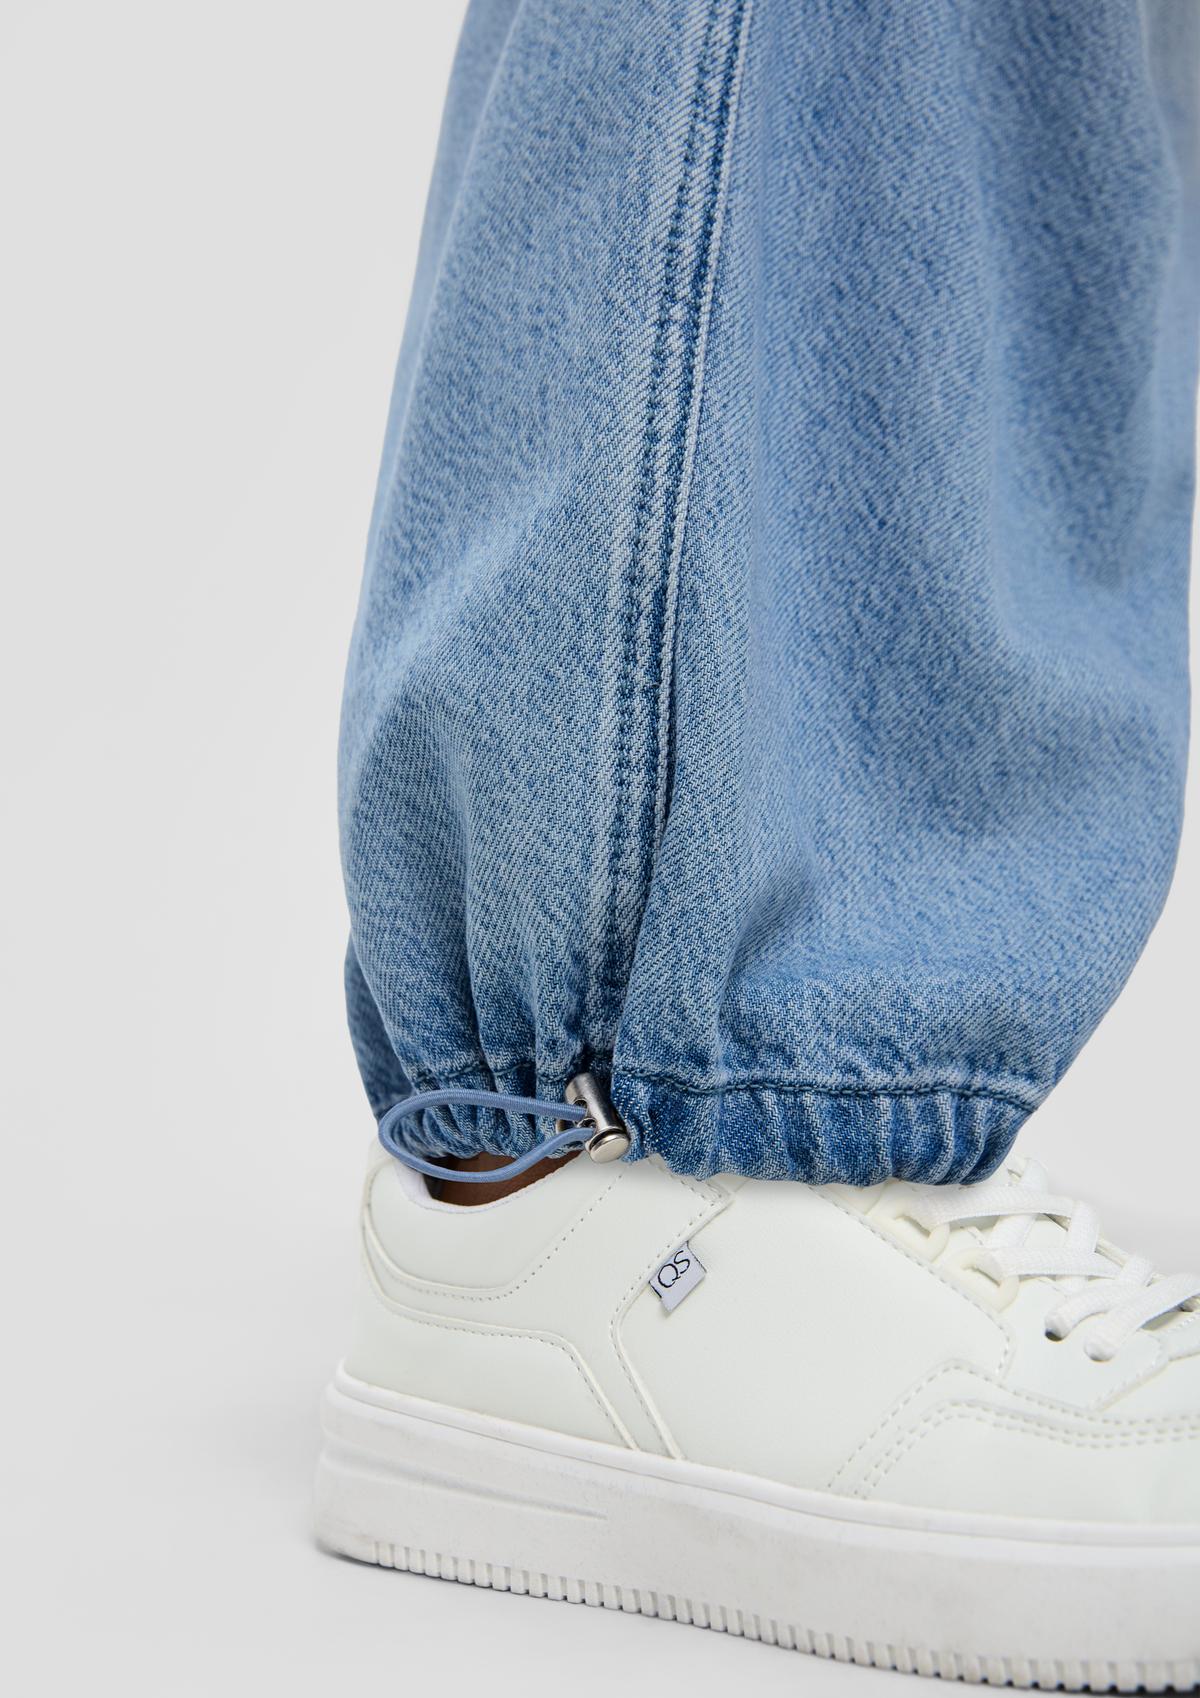 s.Oliver Jeans hlače parachute / kroj Mid Rise / semi široke hlačnice